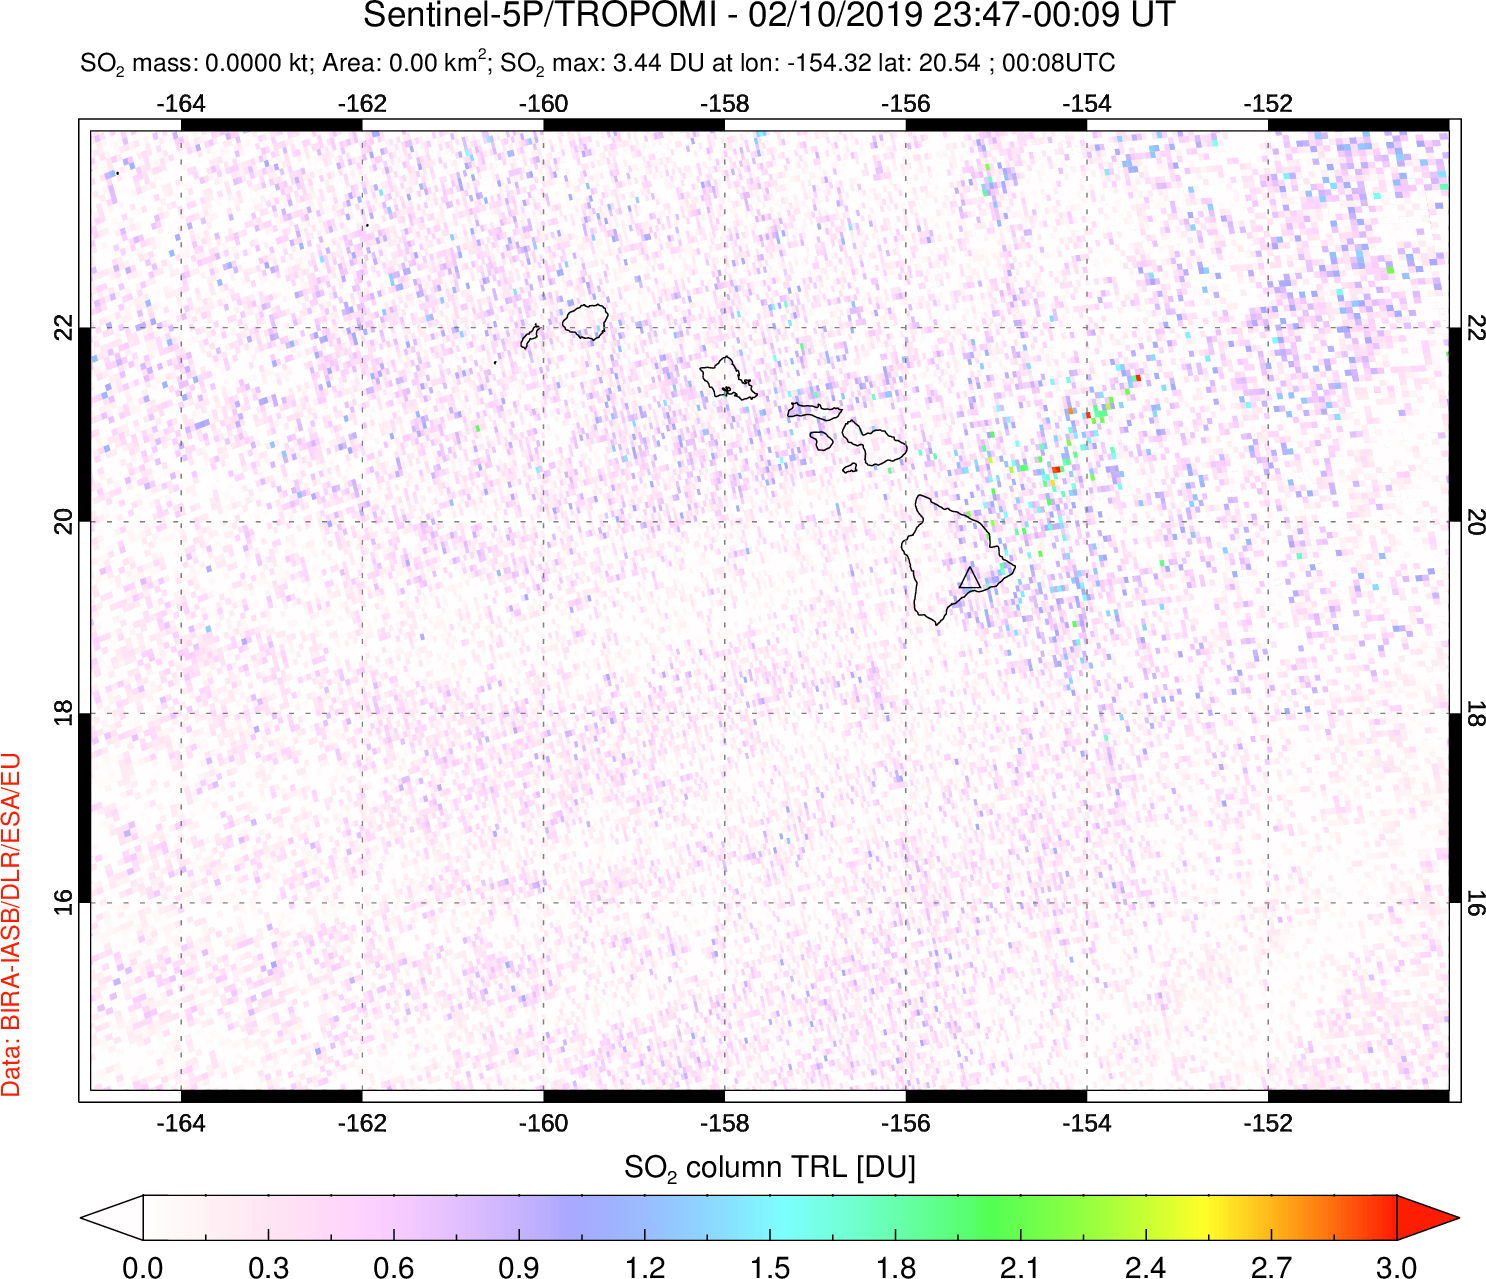 A sulfur dioxide image over Hawaii, USA on Feb 10, 2019.